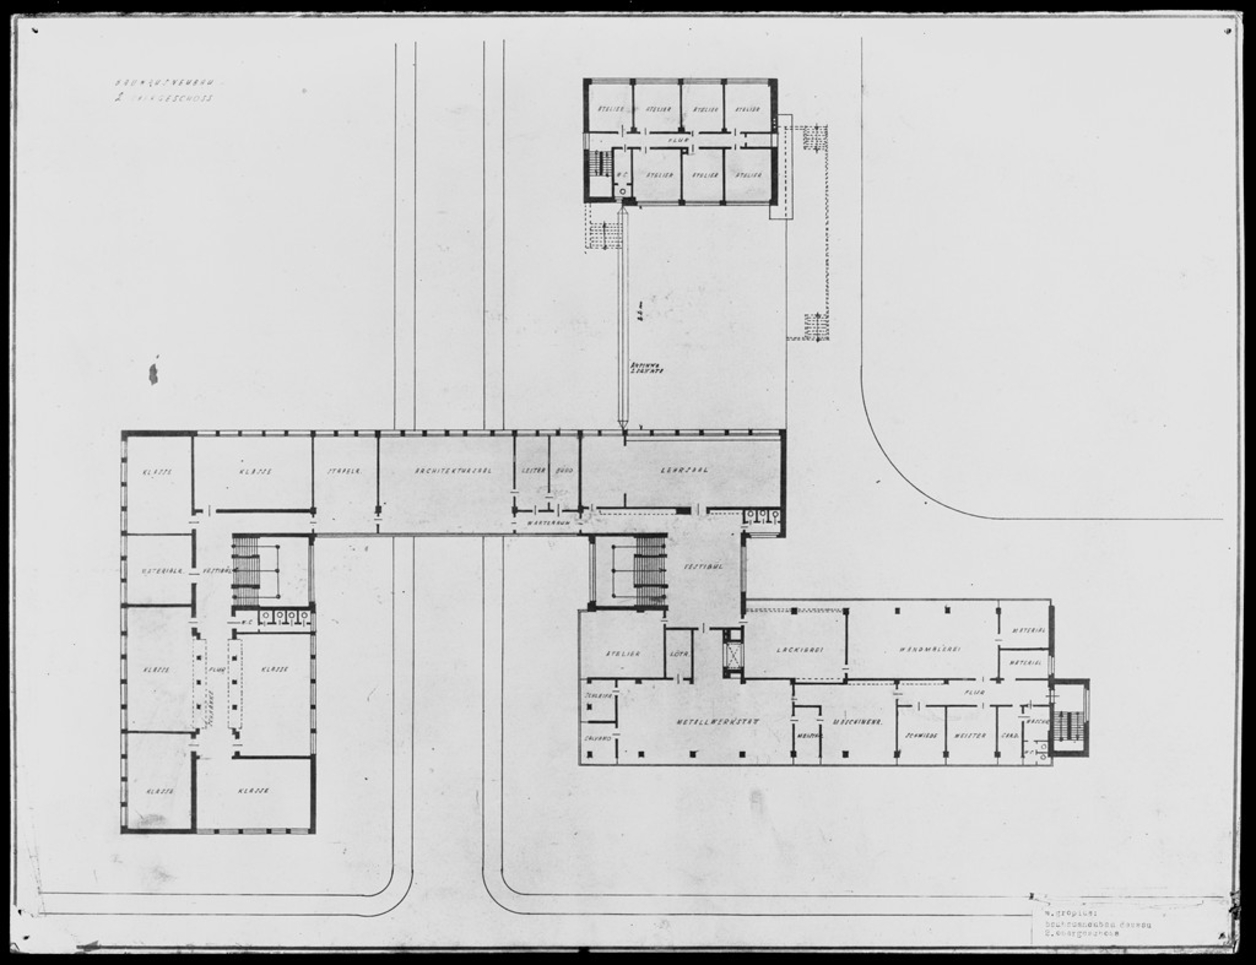 Original floor plan from 1925 by Walter Gropius.